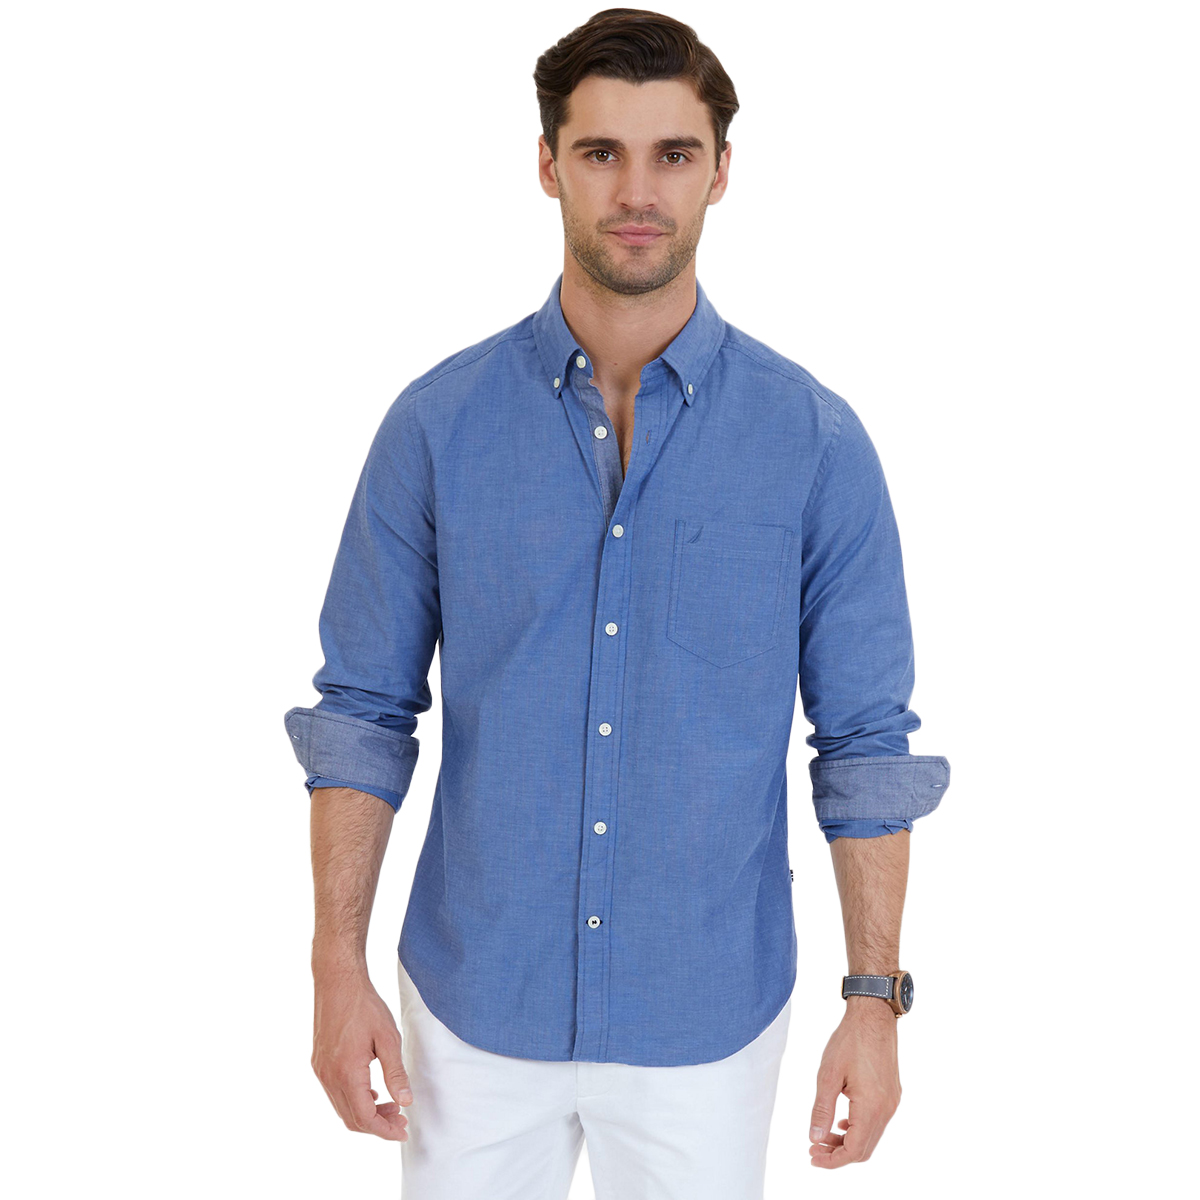 Nautica Men's Classic Fit Soft Wash Long Sleeve Button Down Shirt - Blue, L